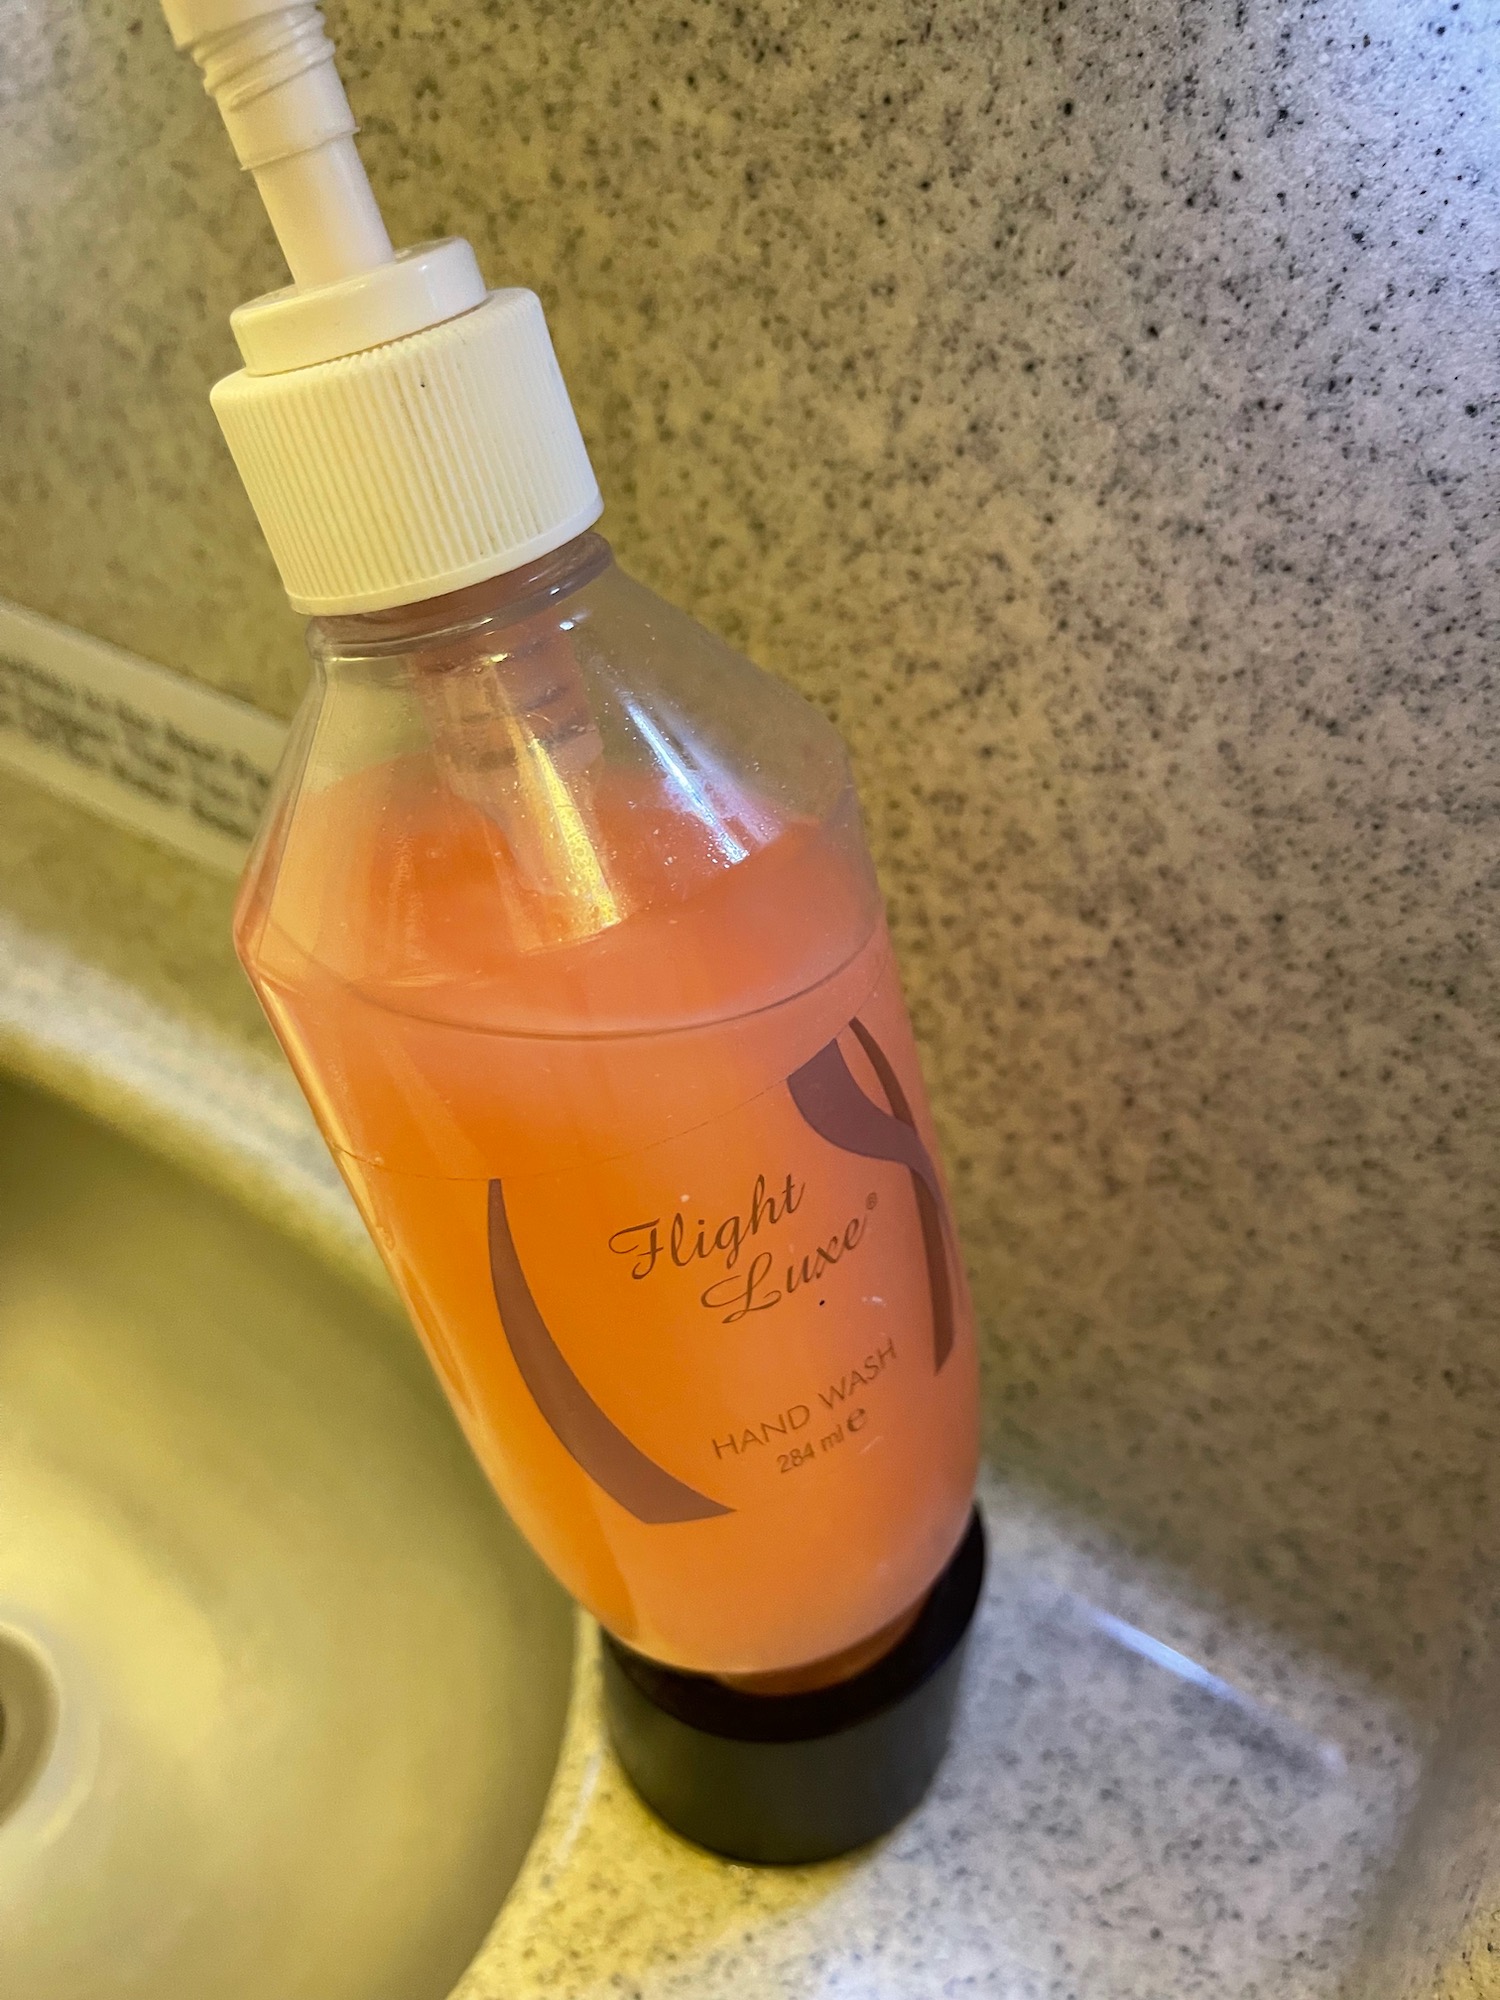 a bottle of liquid on a sink